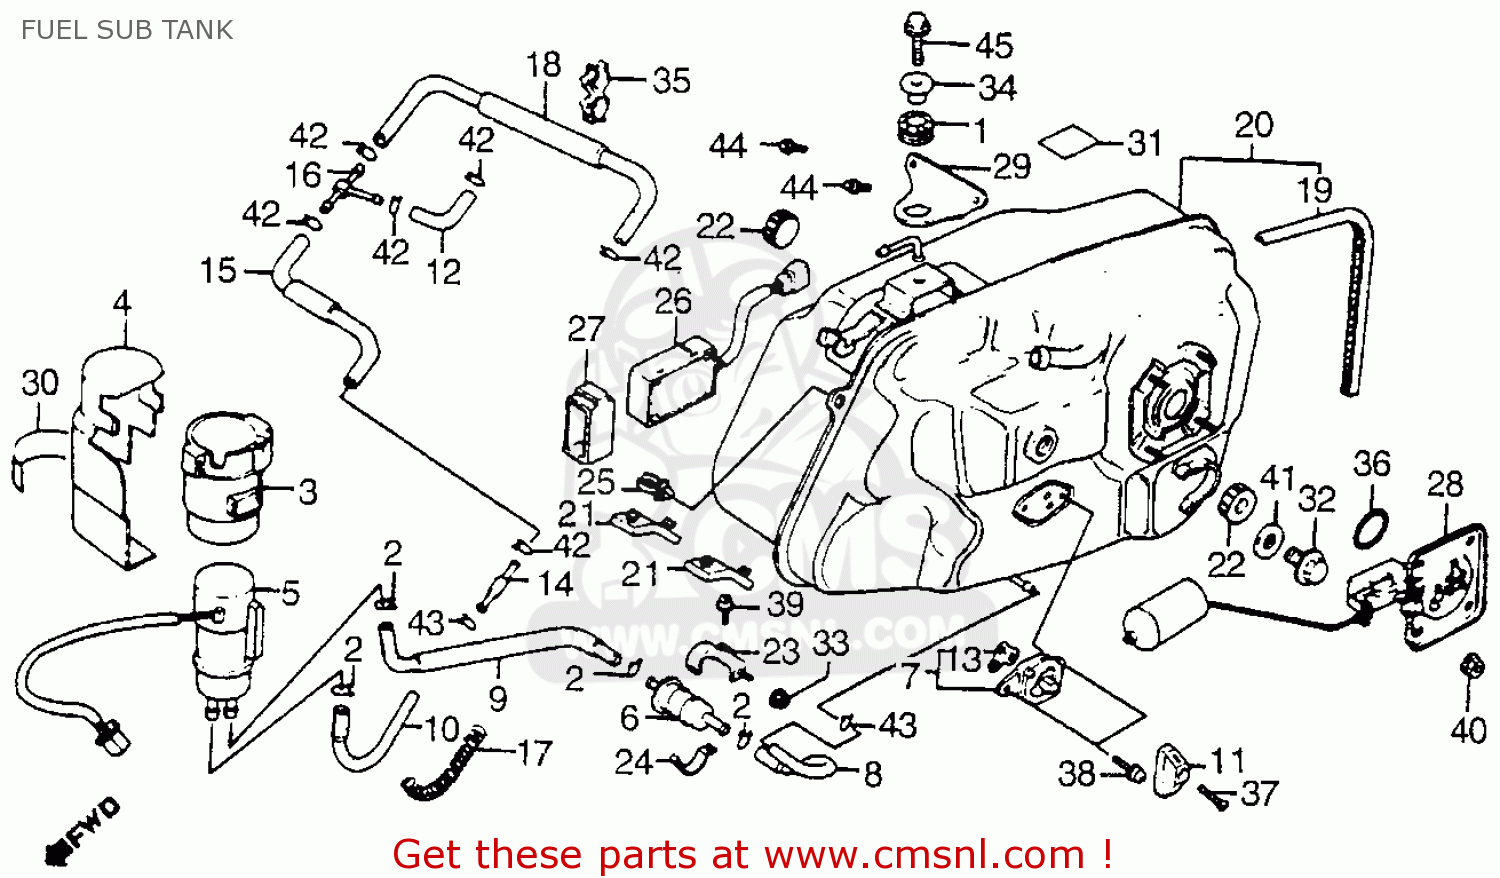 1100 Honda schematics #3